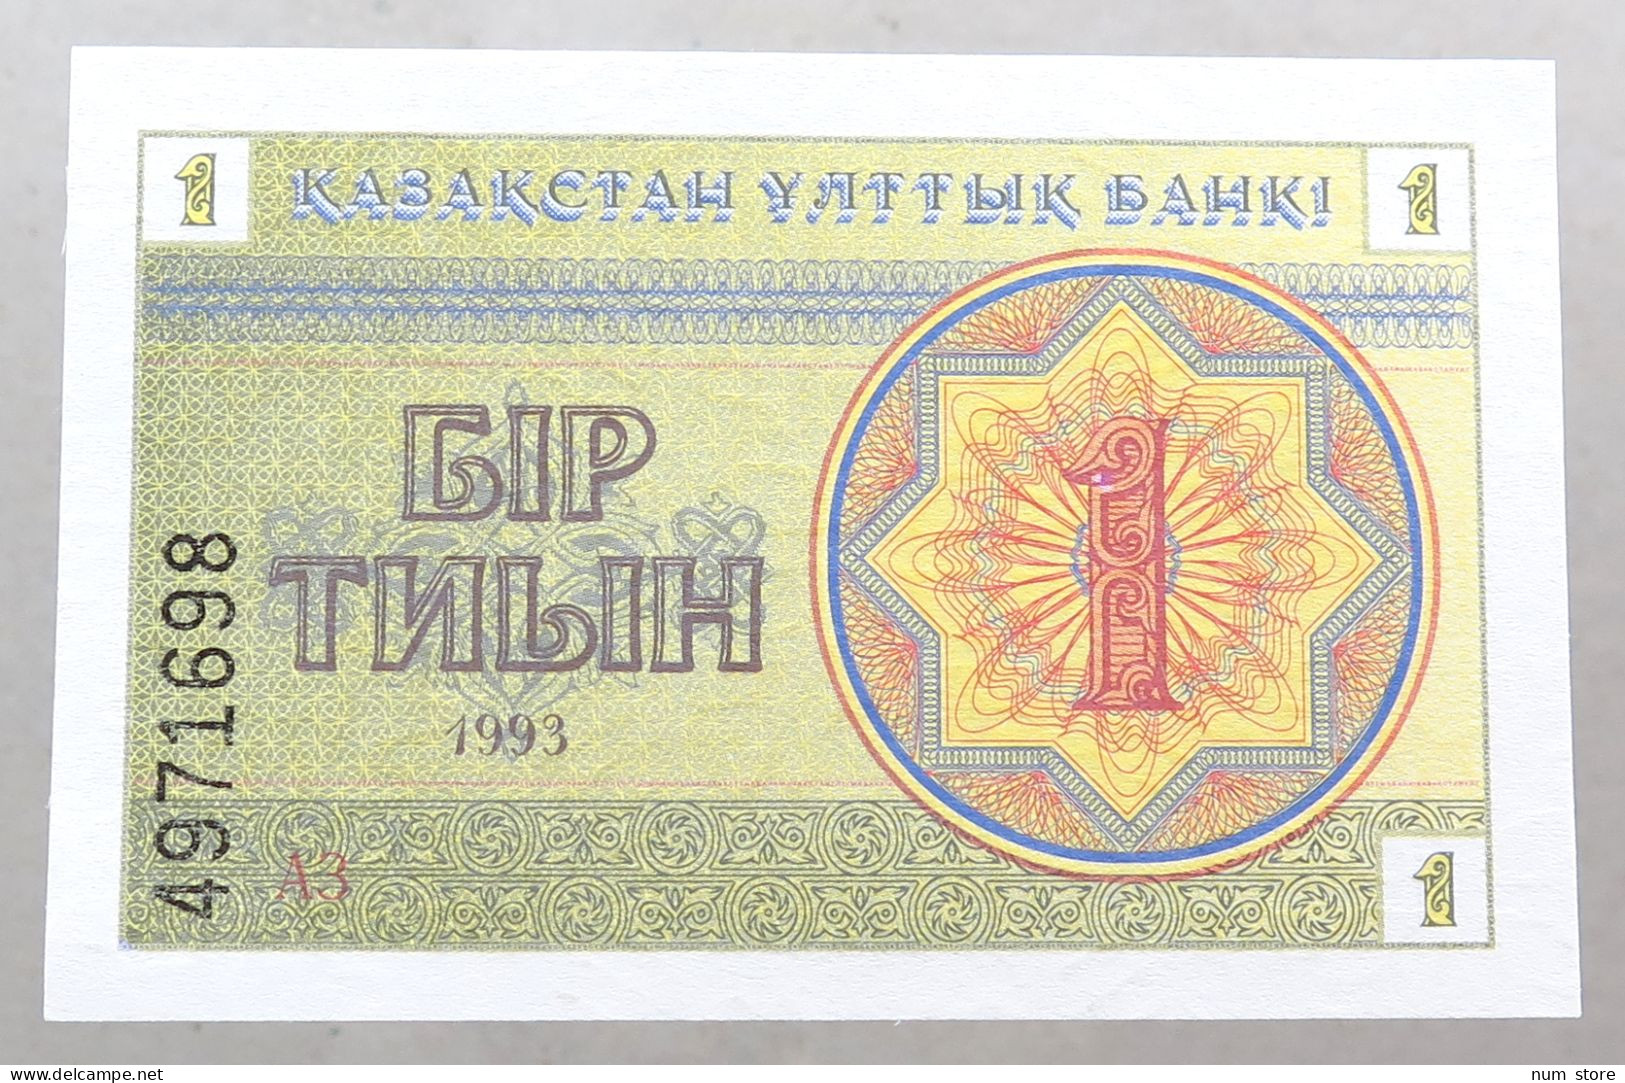 KAZAKHSTAN 1 TENGE 1993 TOP #alb051 1591 - Kazachstan